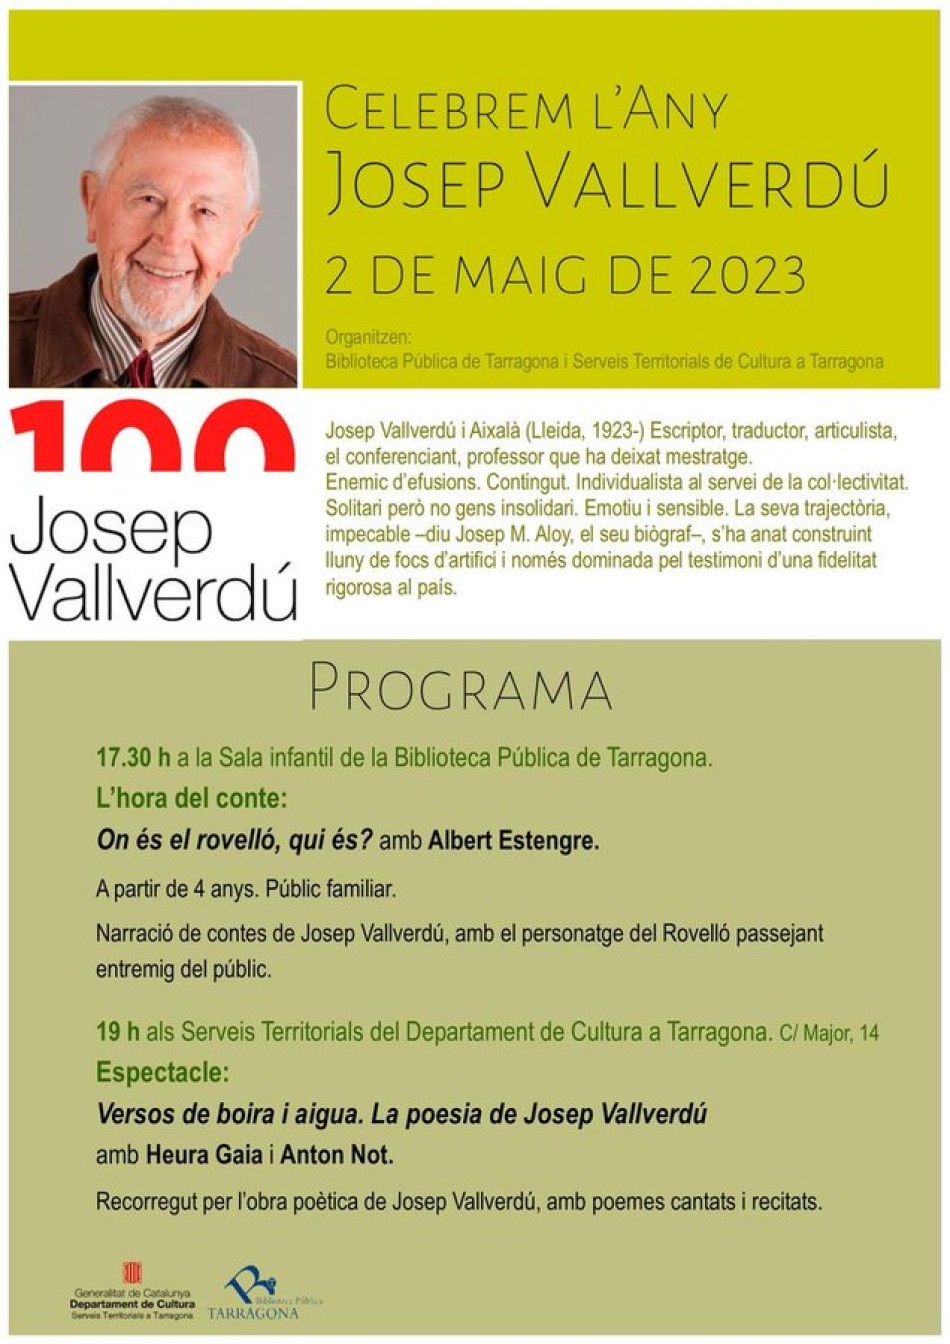 Celebrem l'any Josep Vallverdú